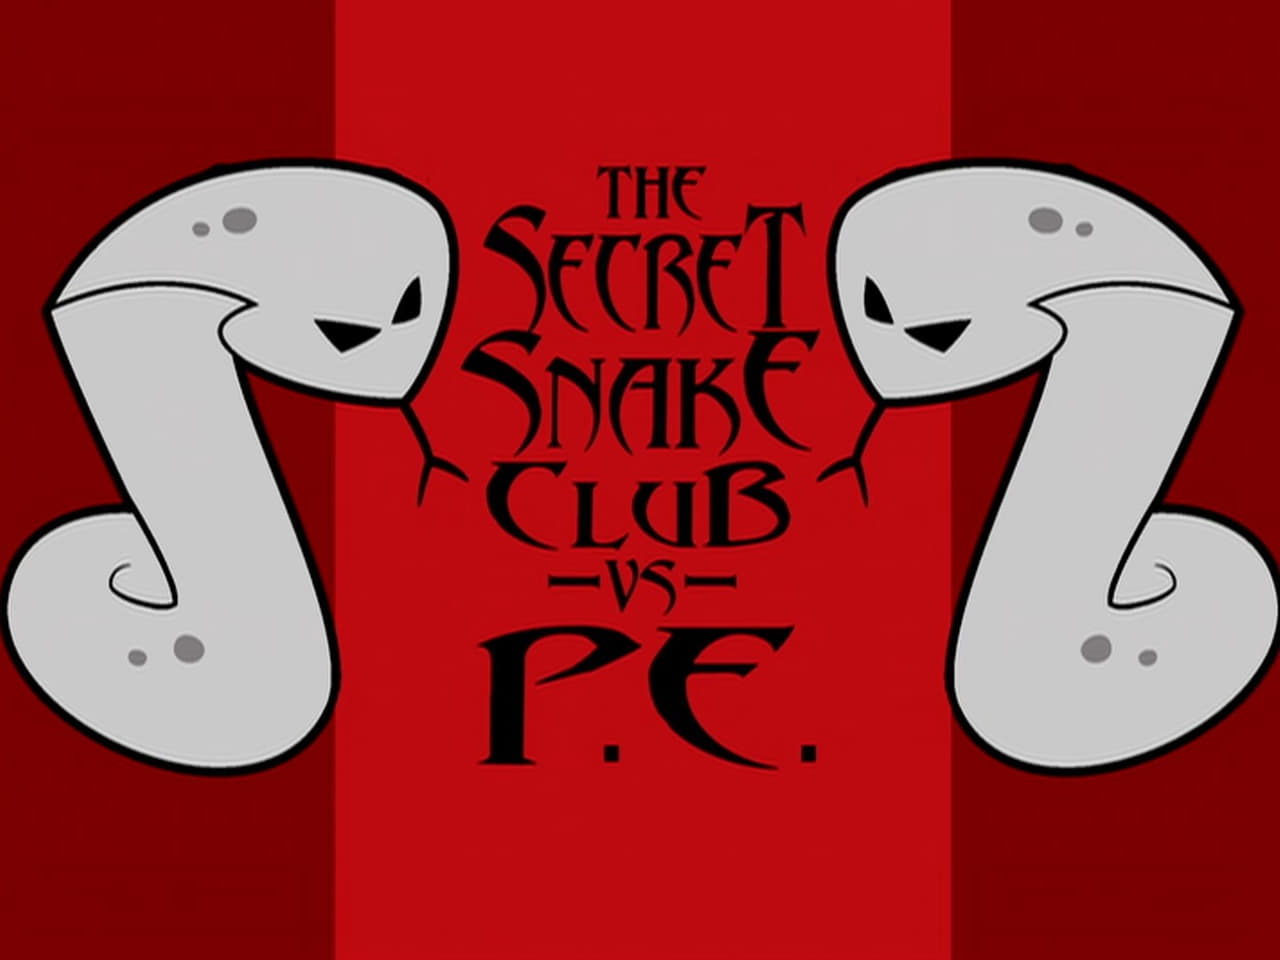 The Grim Adventures of Billy and Mandy - Season 7 Episode 3 : The Secret Snake Club vs P.E.